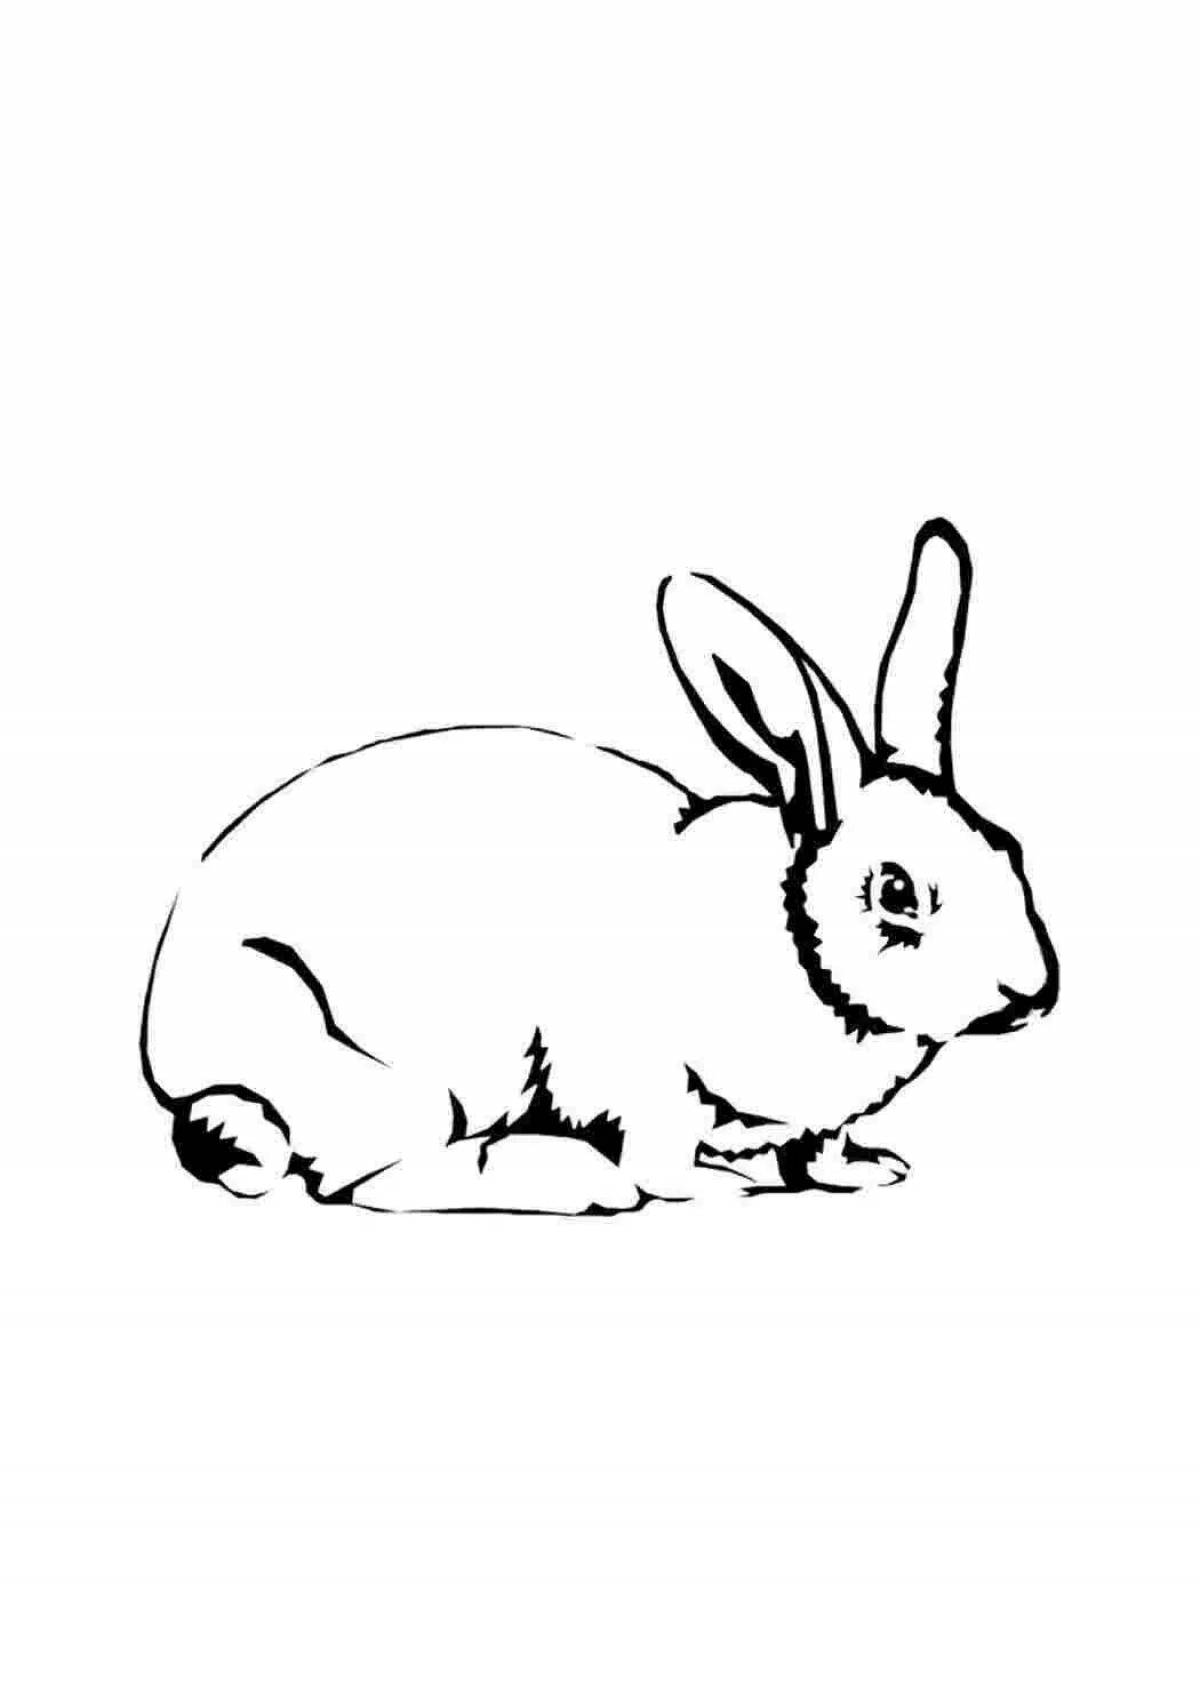 Joyful rabbit coloring